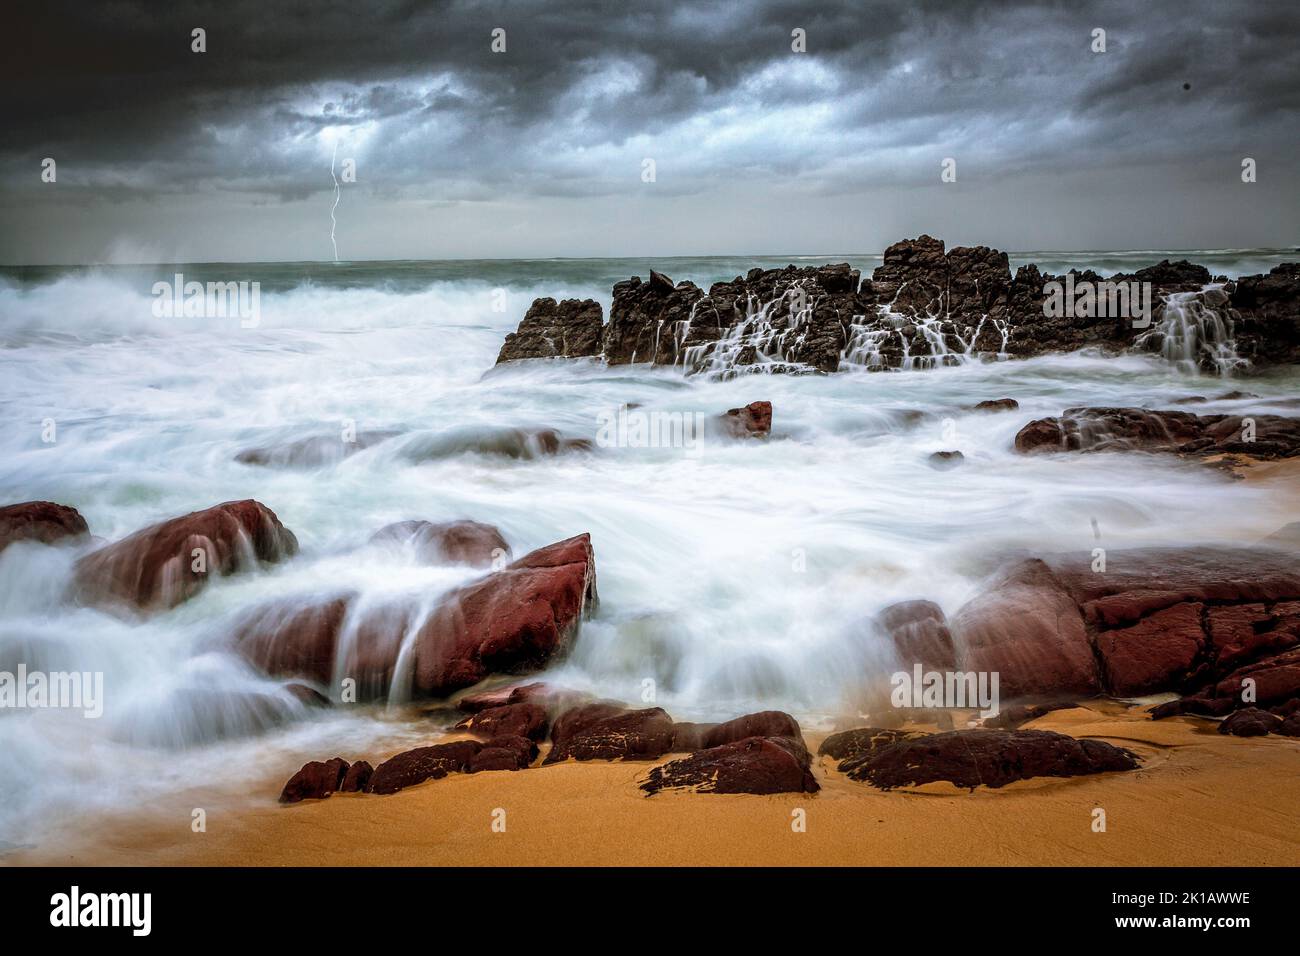 Storm over beach and turbulent waves crash over rocks onto seashore Stock Photo